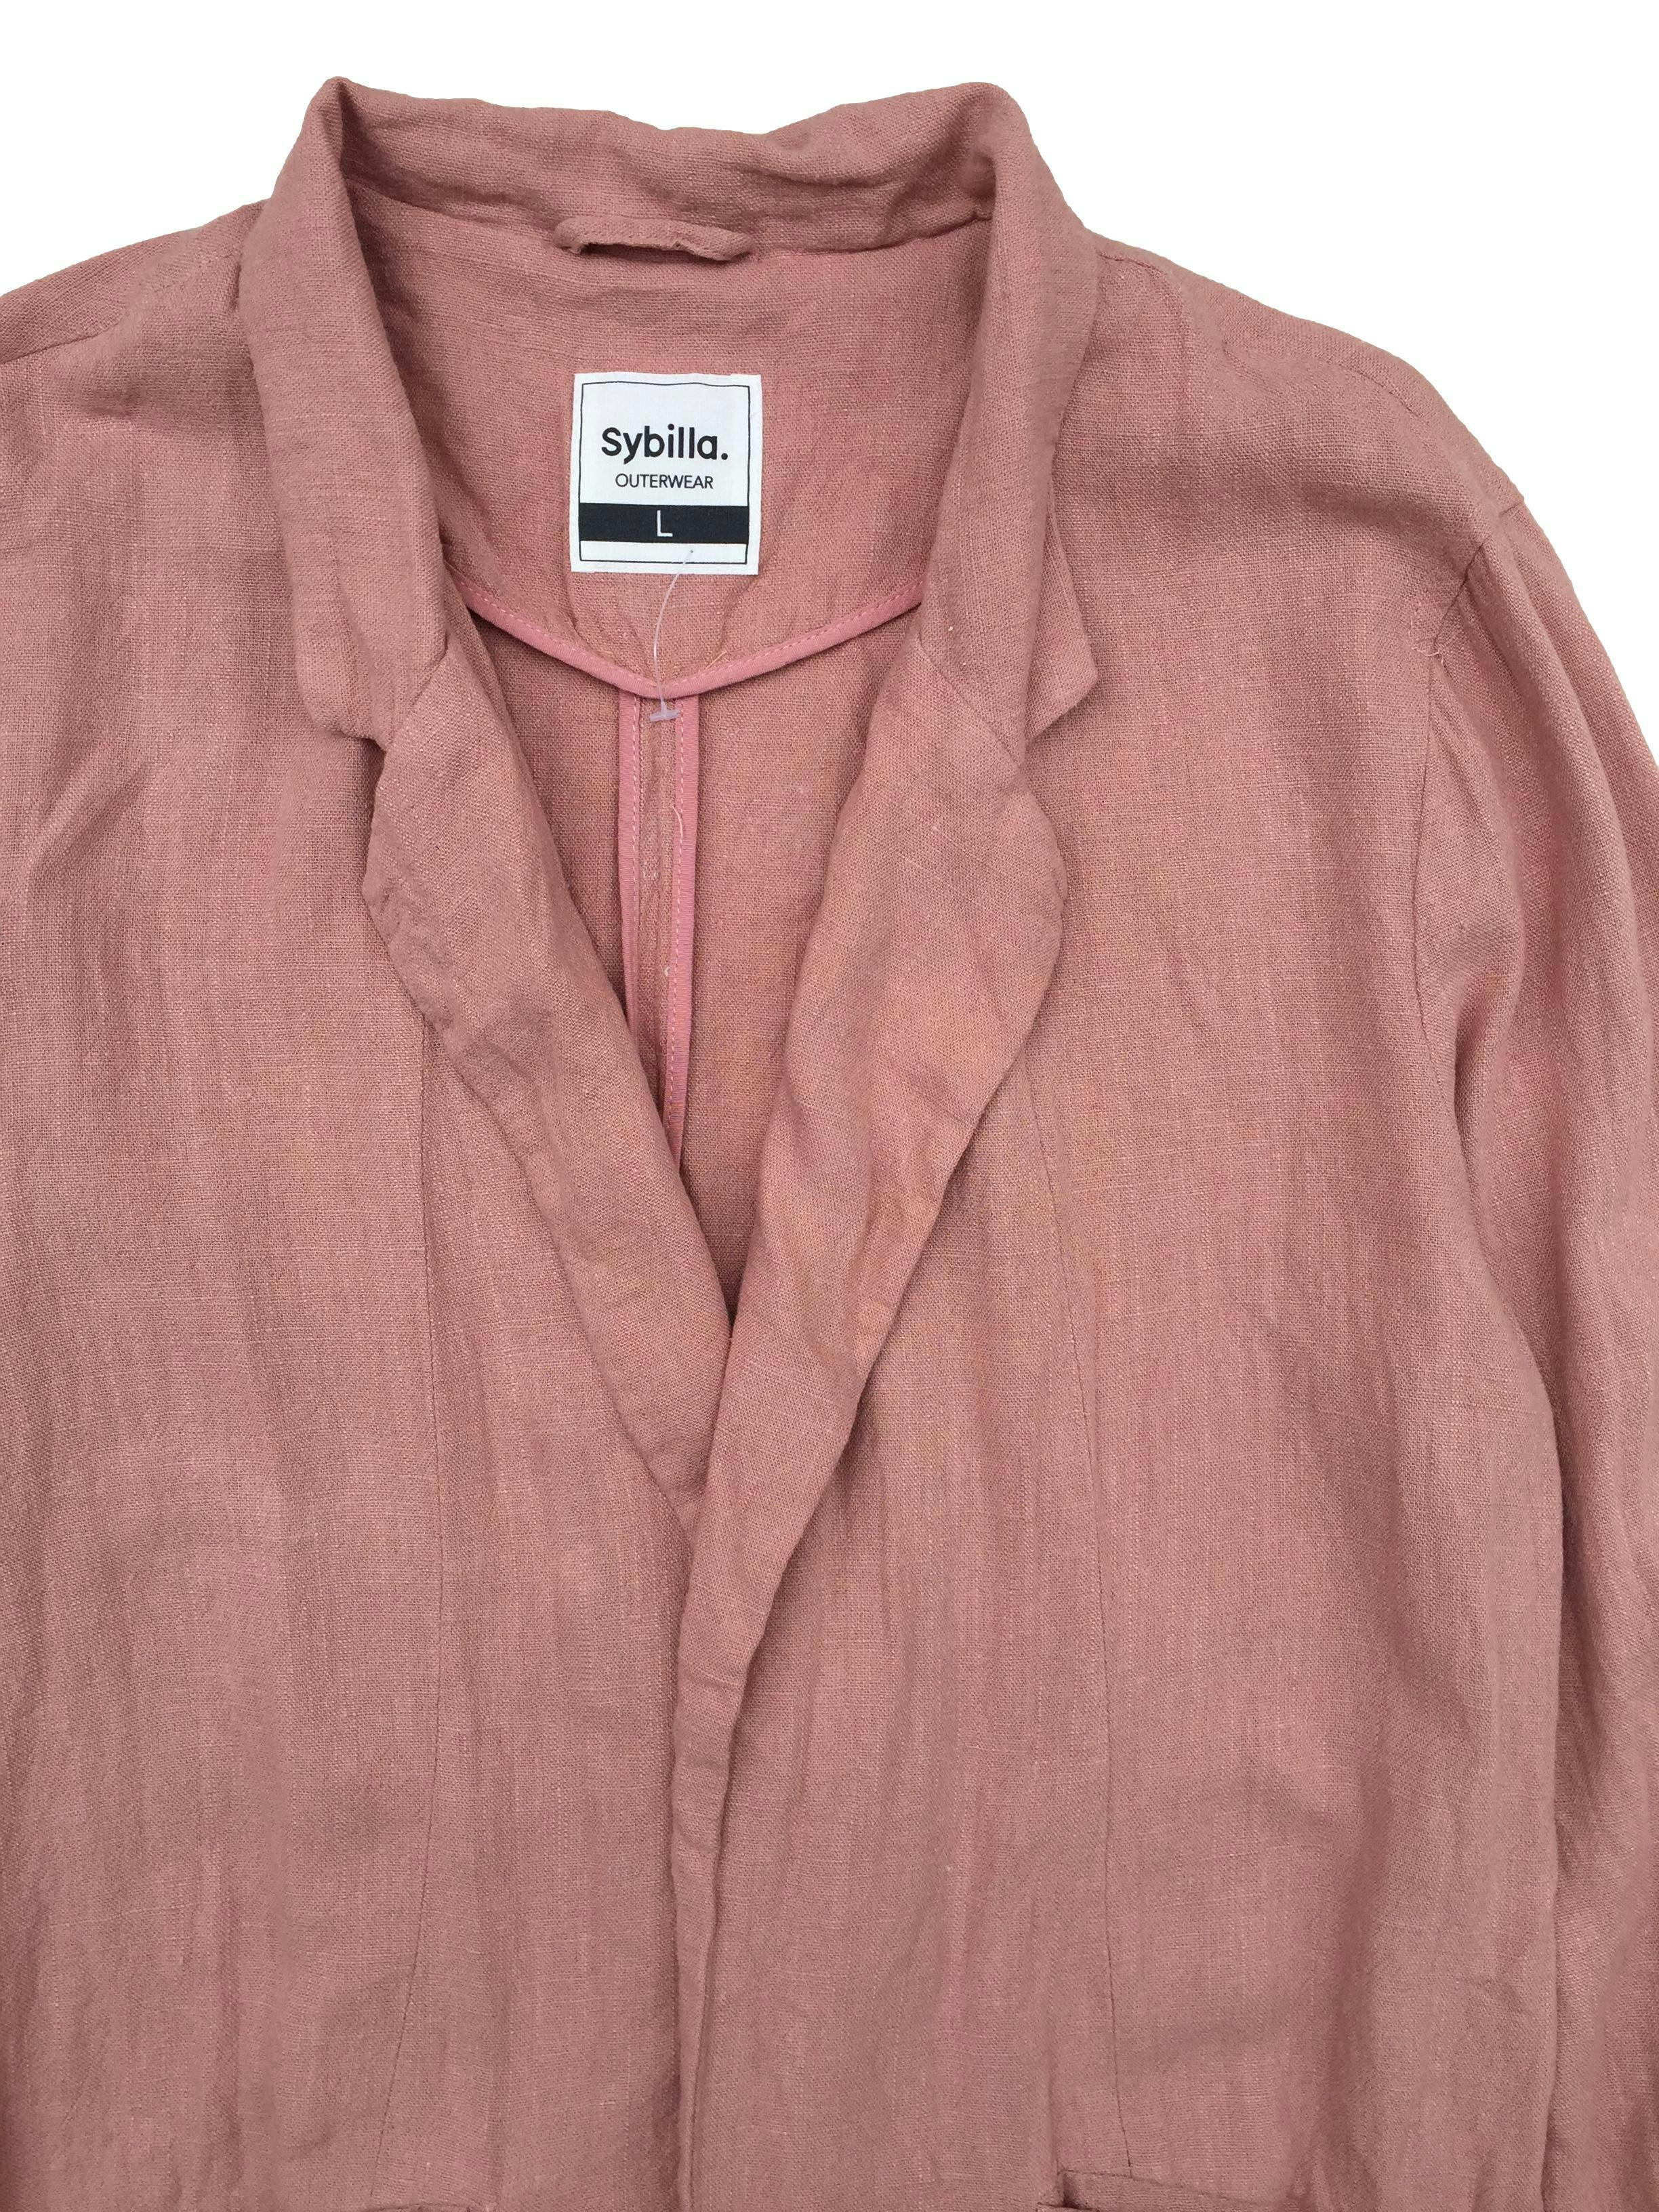 Camisa Sybilla, modelo abierto palo rosa, bolsillos delanteros. Busto: 100cm, Largo: 69cm